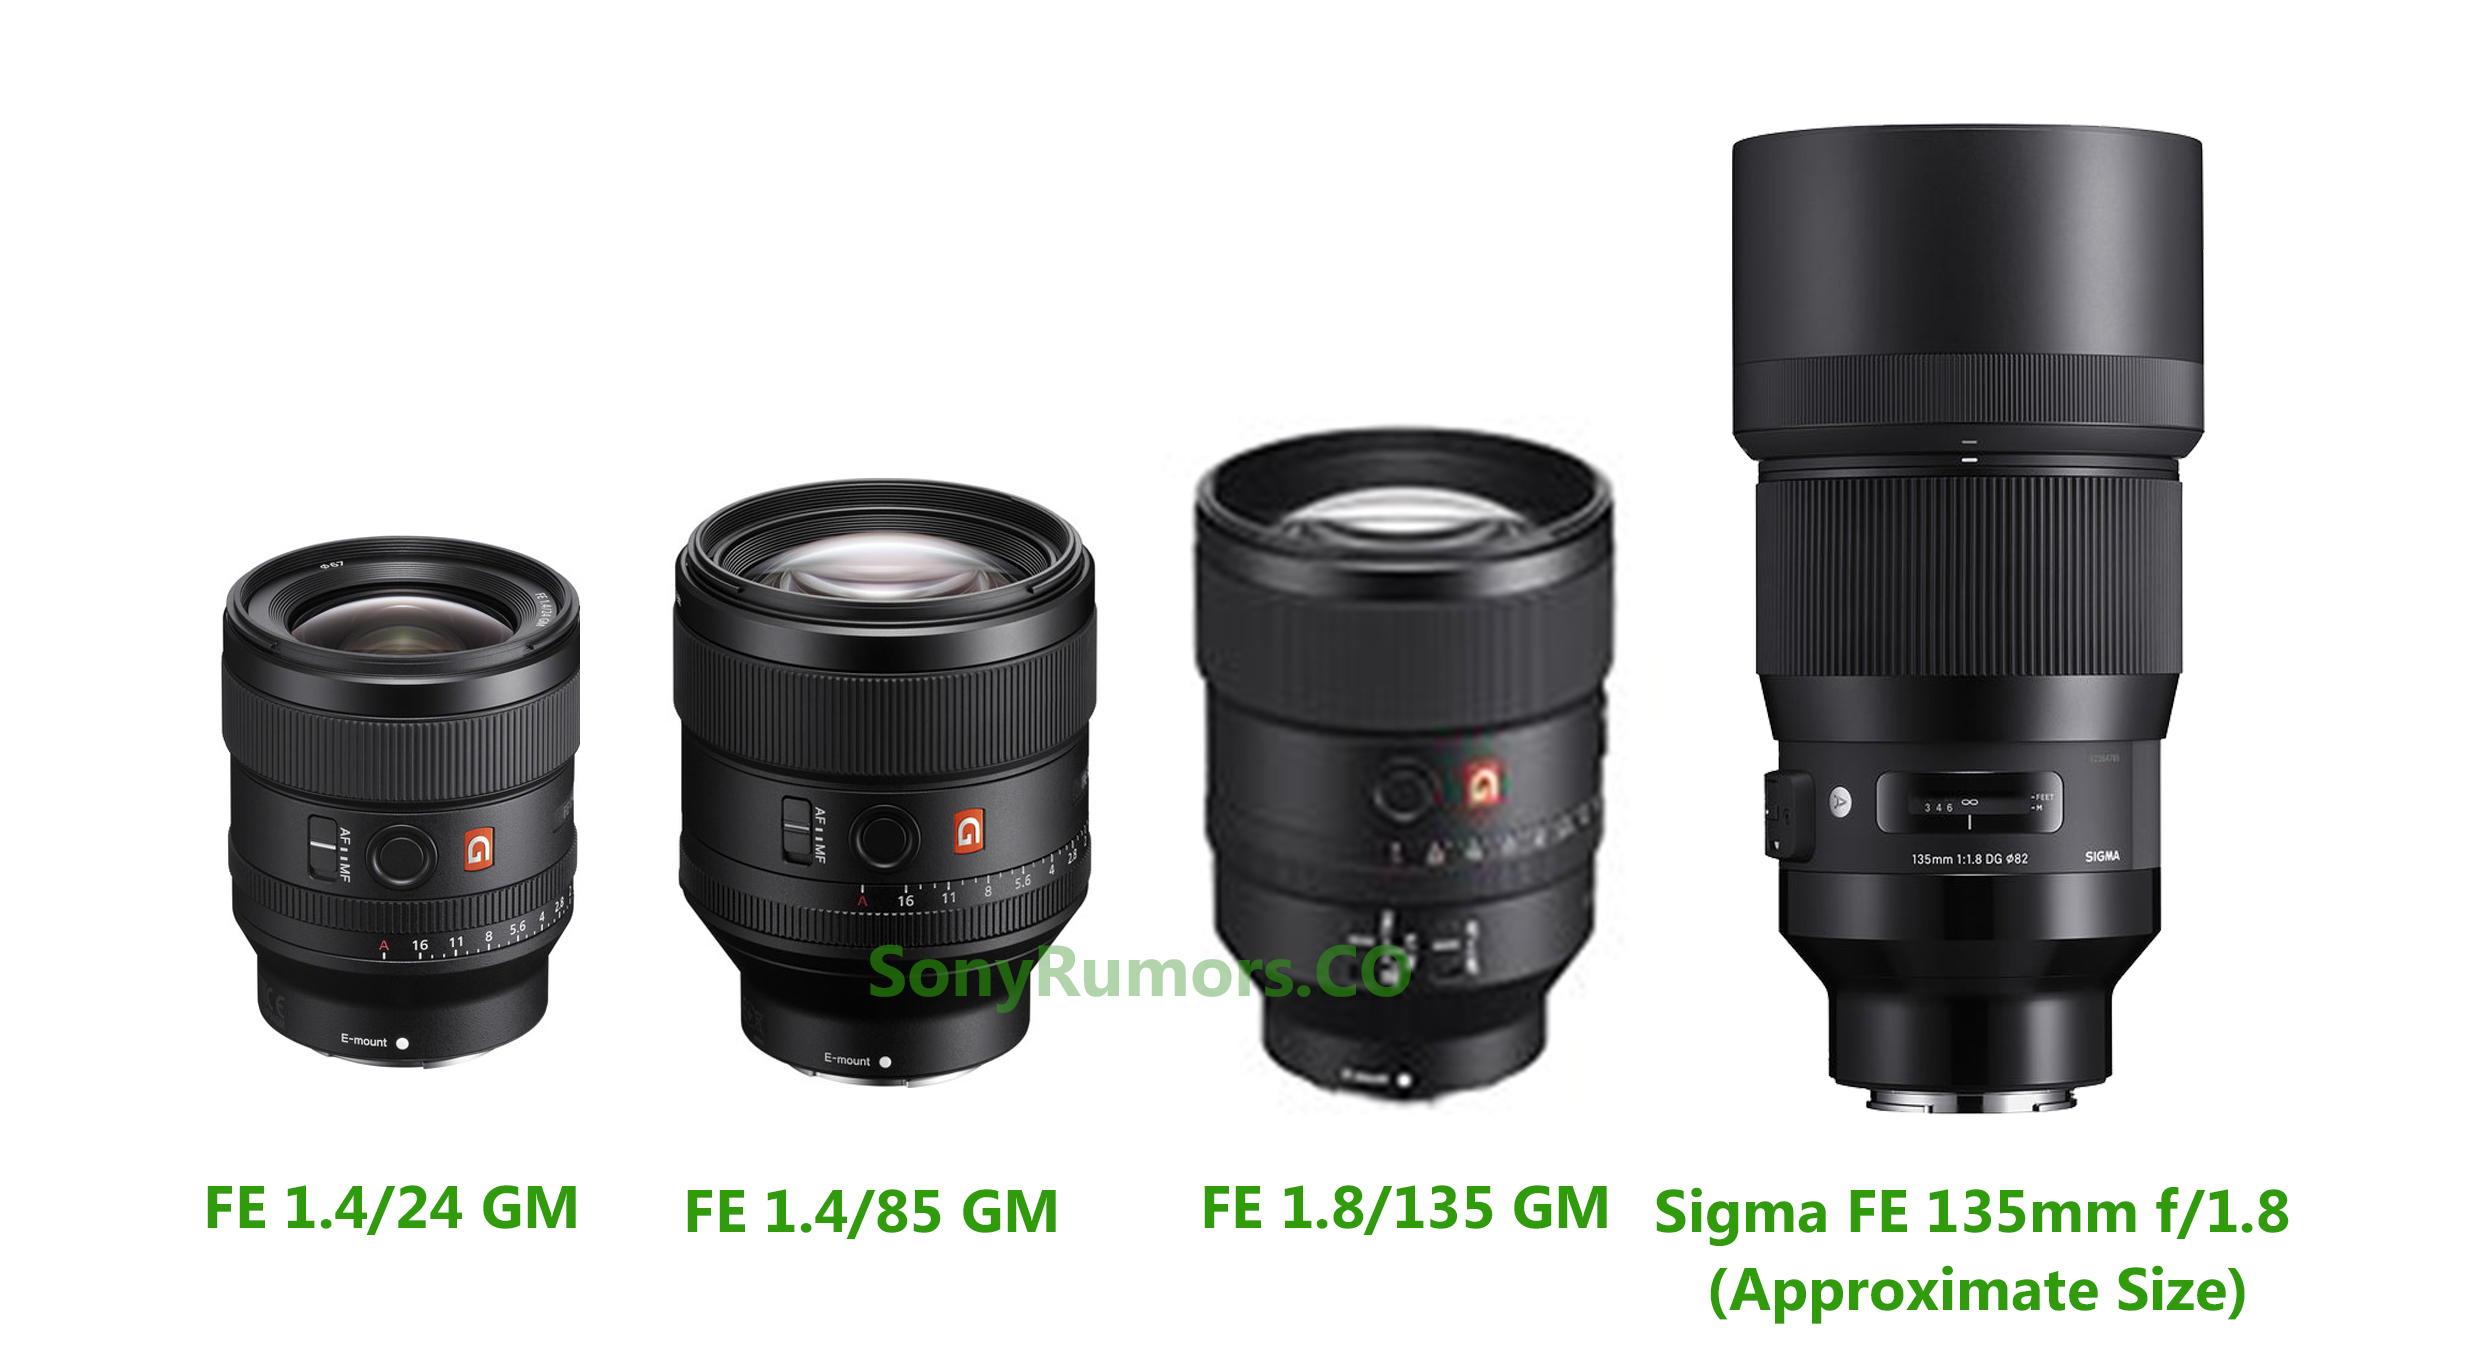 Sony FE 135mm f/1.8 GM Lens Leaked Image ! - Camera News at Cameraegg